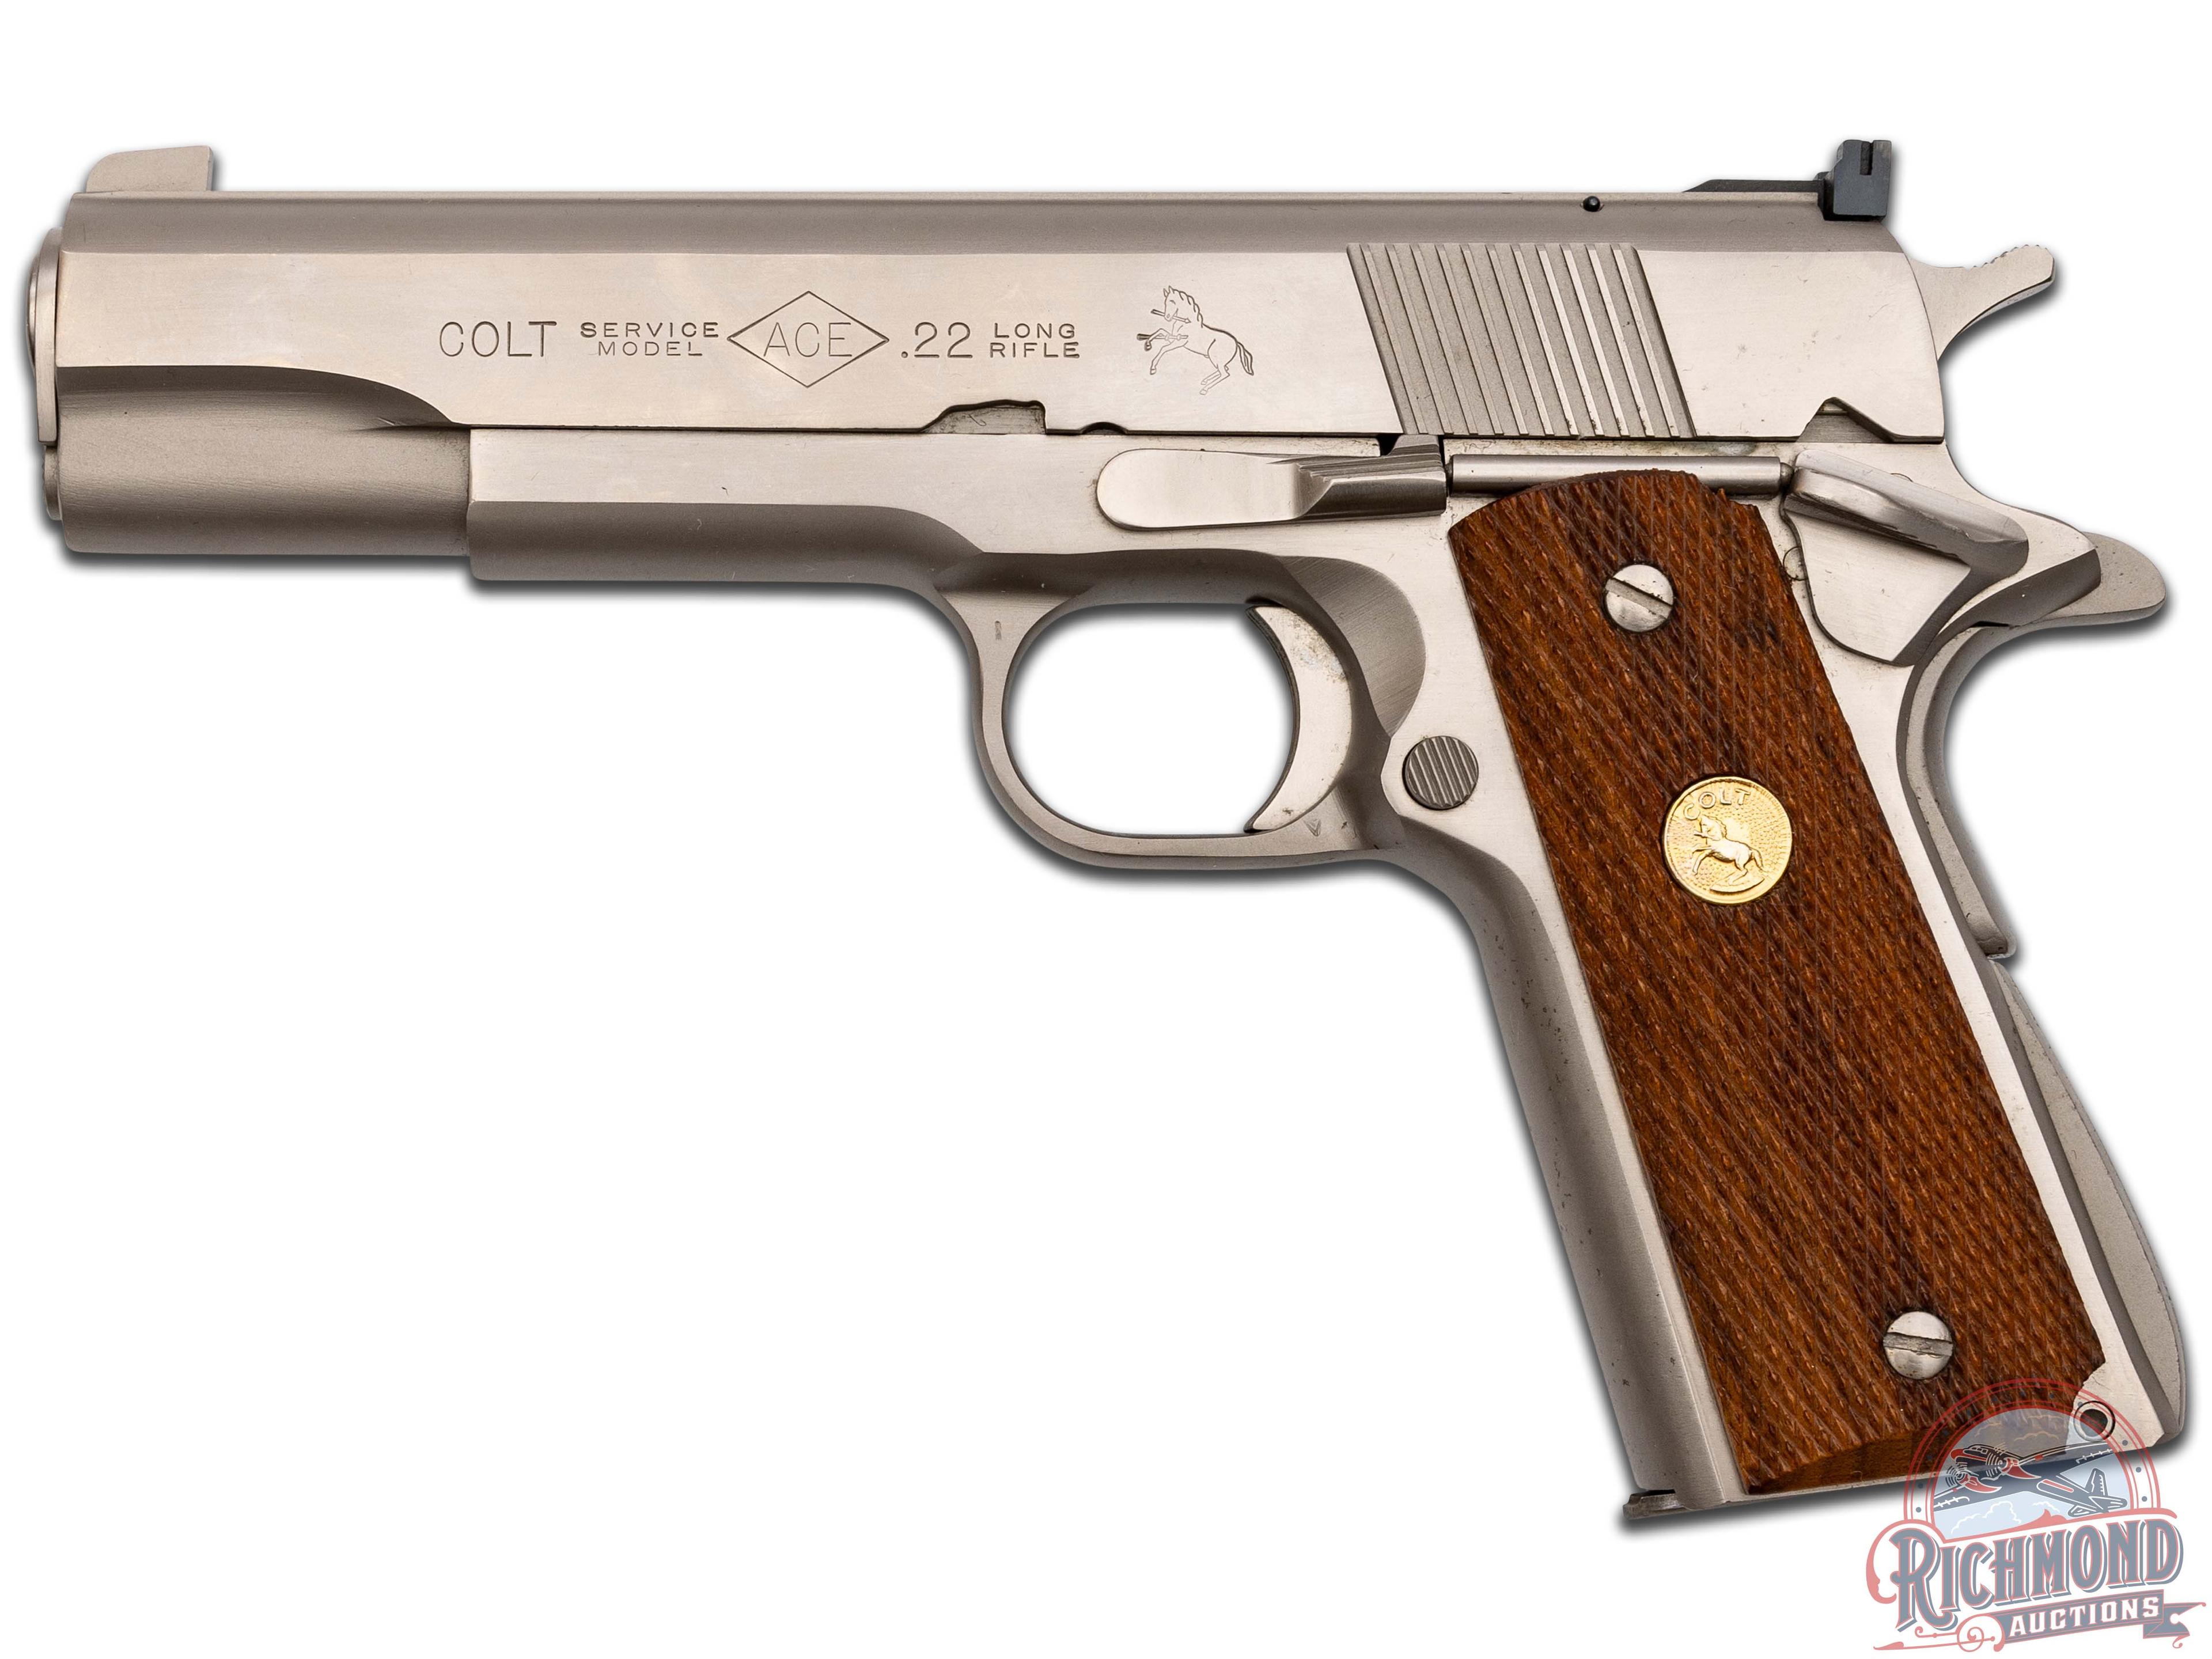 1979 Colt Electroless Nickel 1911 ACE .22 LR Semi-Automatic Pistol in Original Box